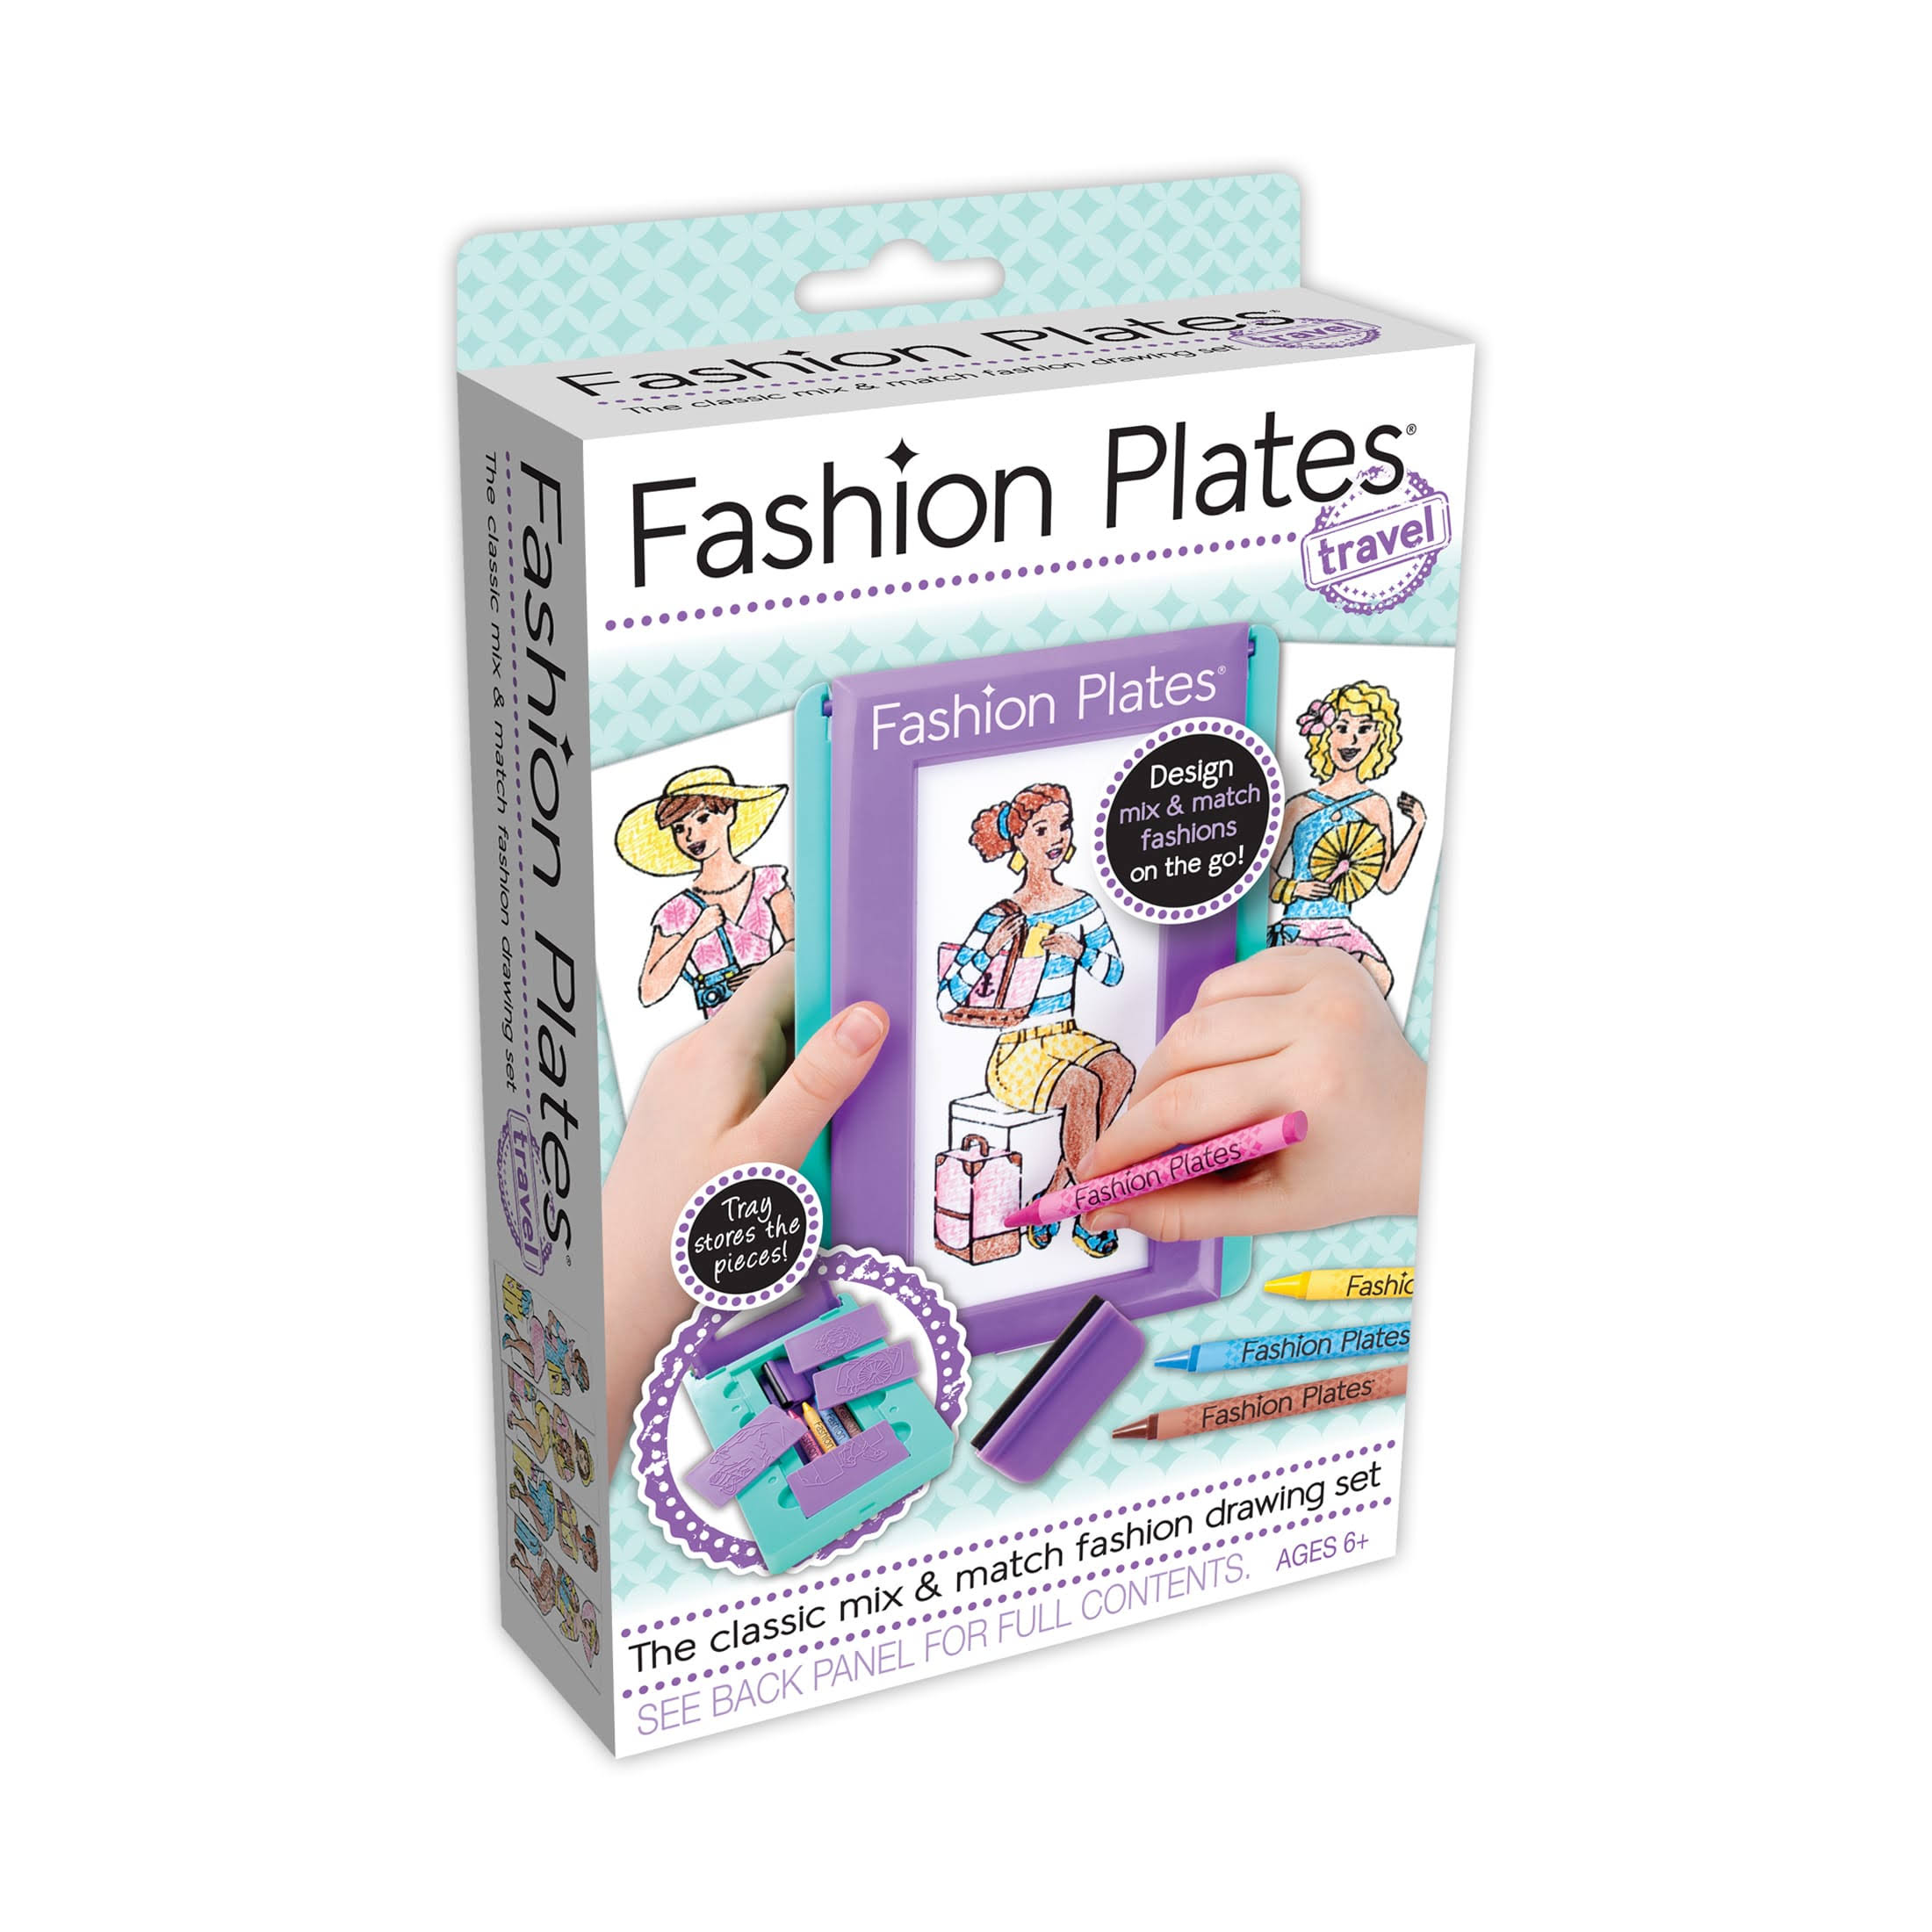 Kahootz Fashion Plates Craft Set - Travel